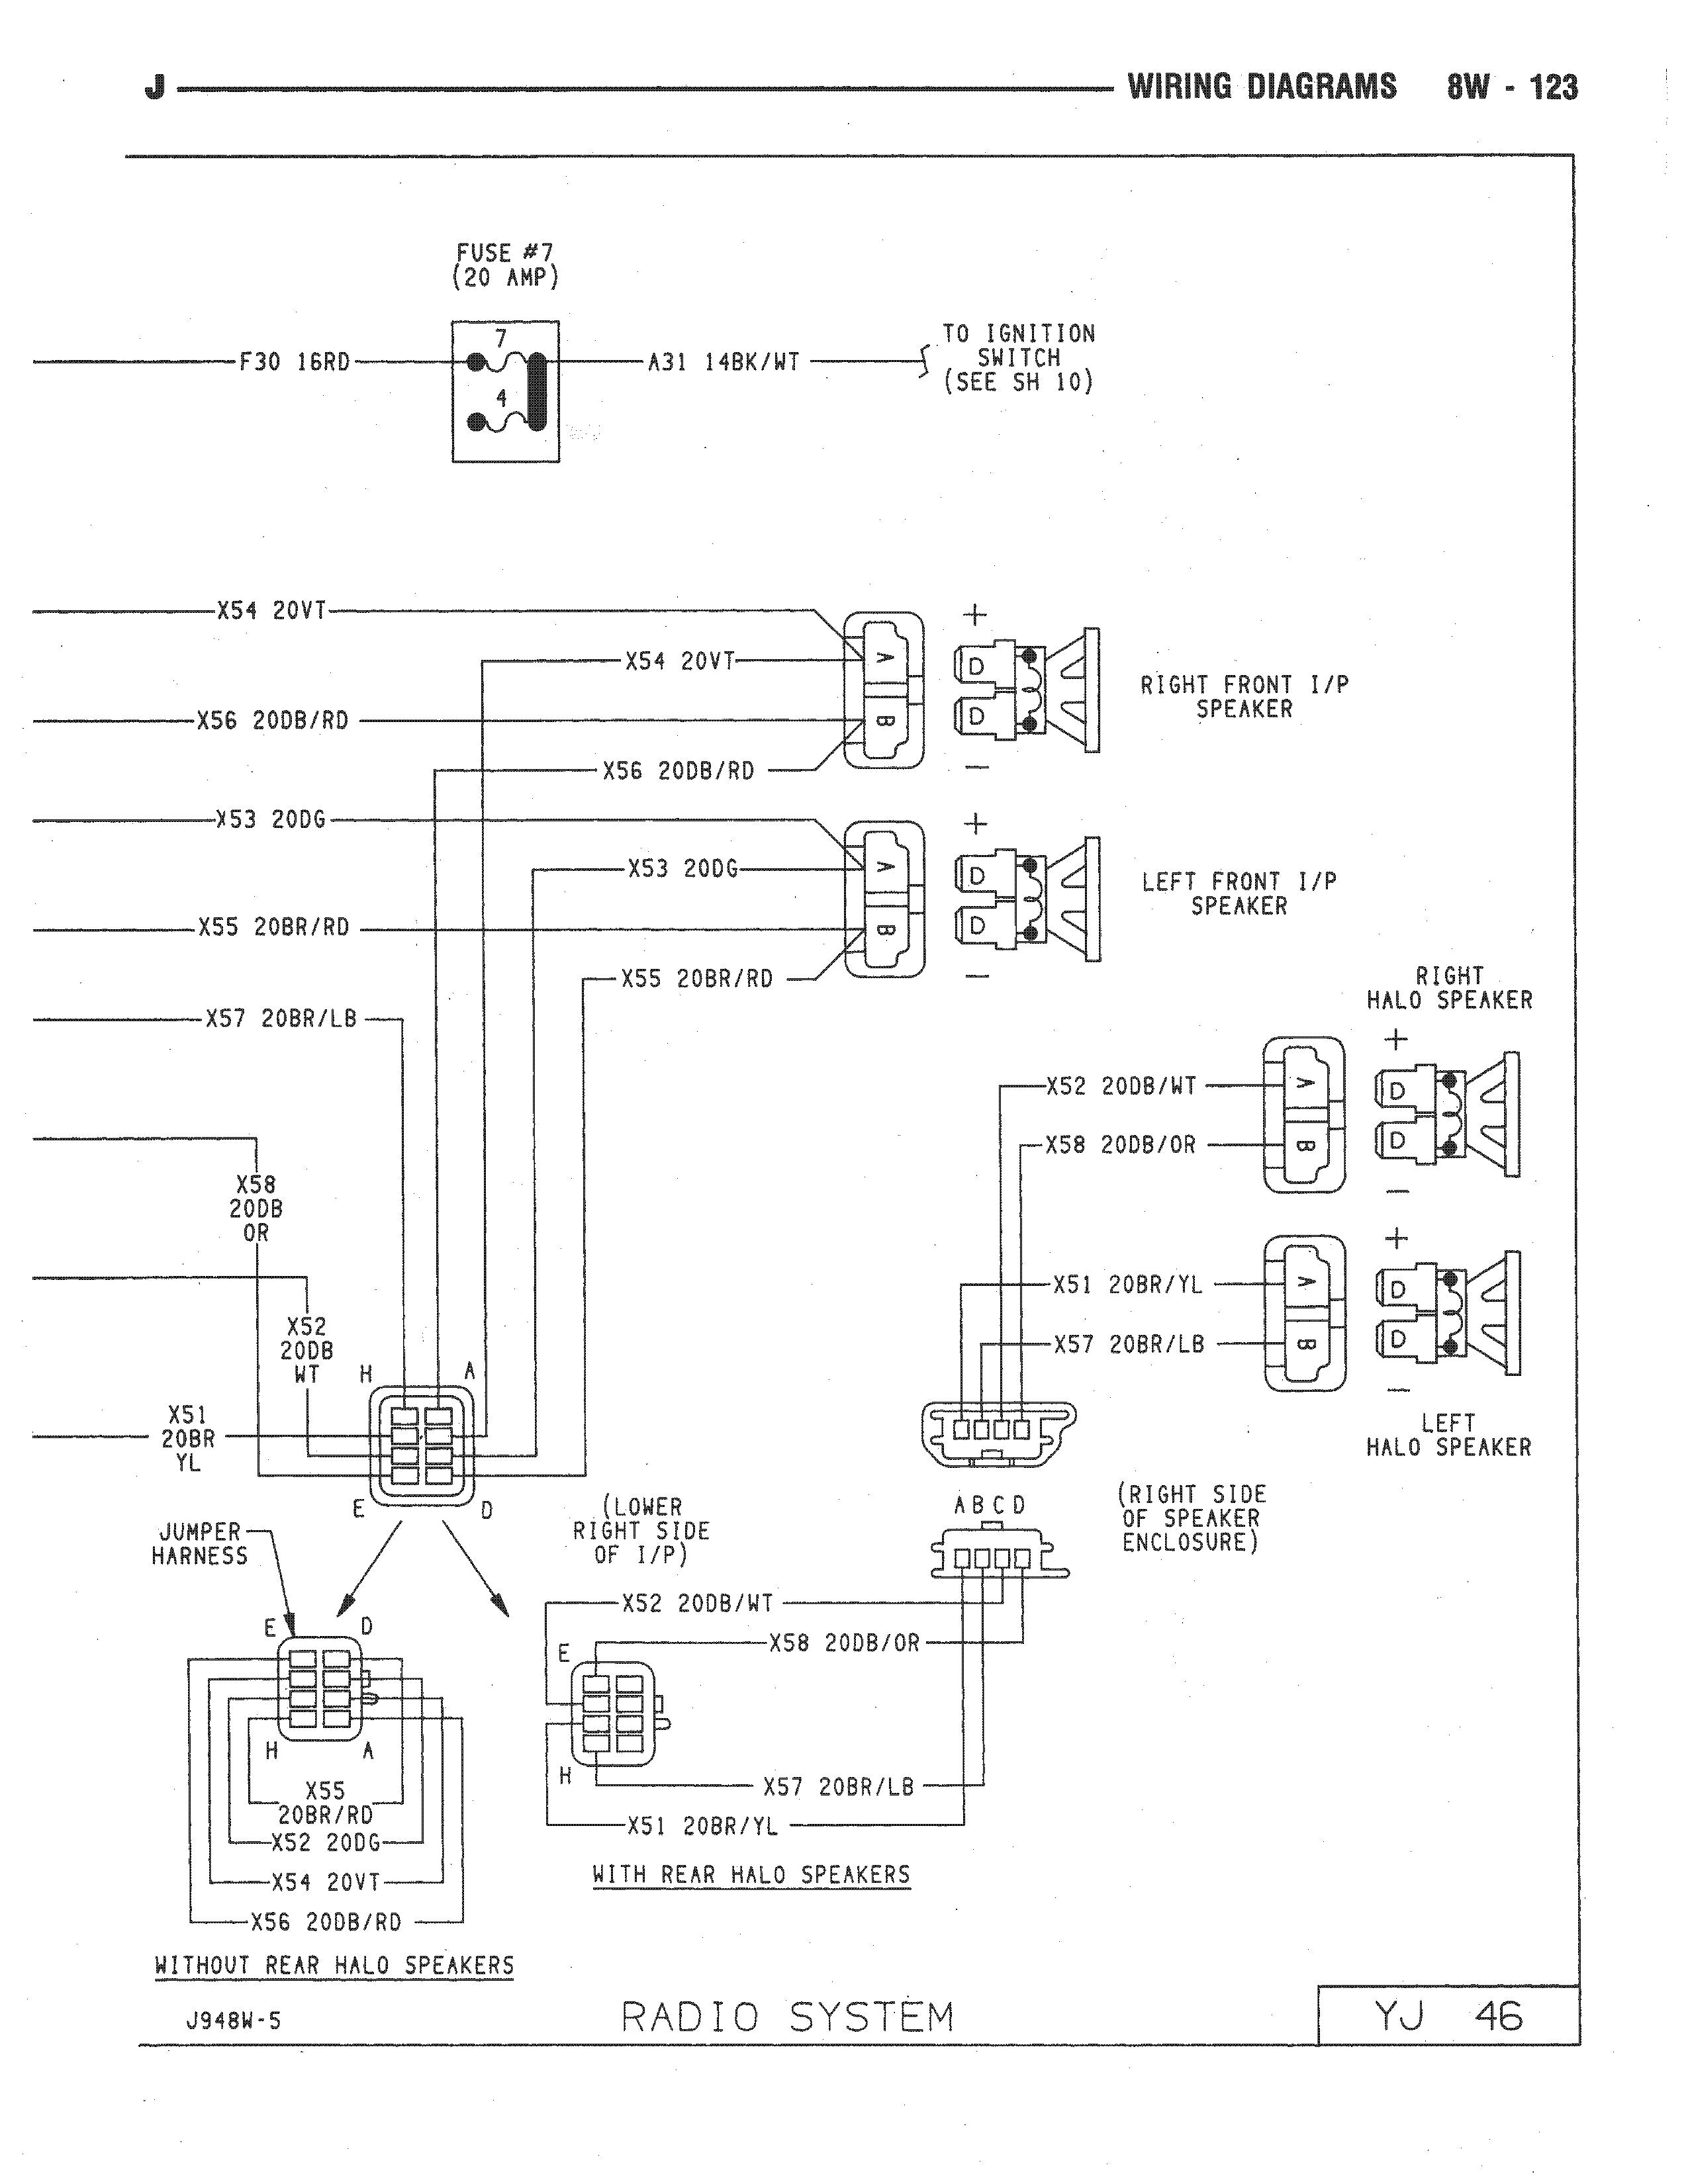 1999 jeep wrangler wiring diagram 2007 liberty radio electrical circuit stereo best of jpg